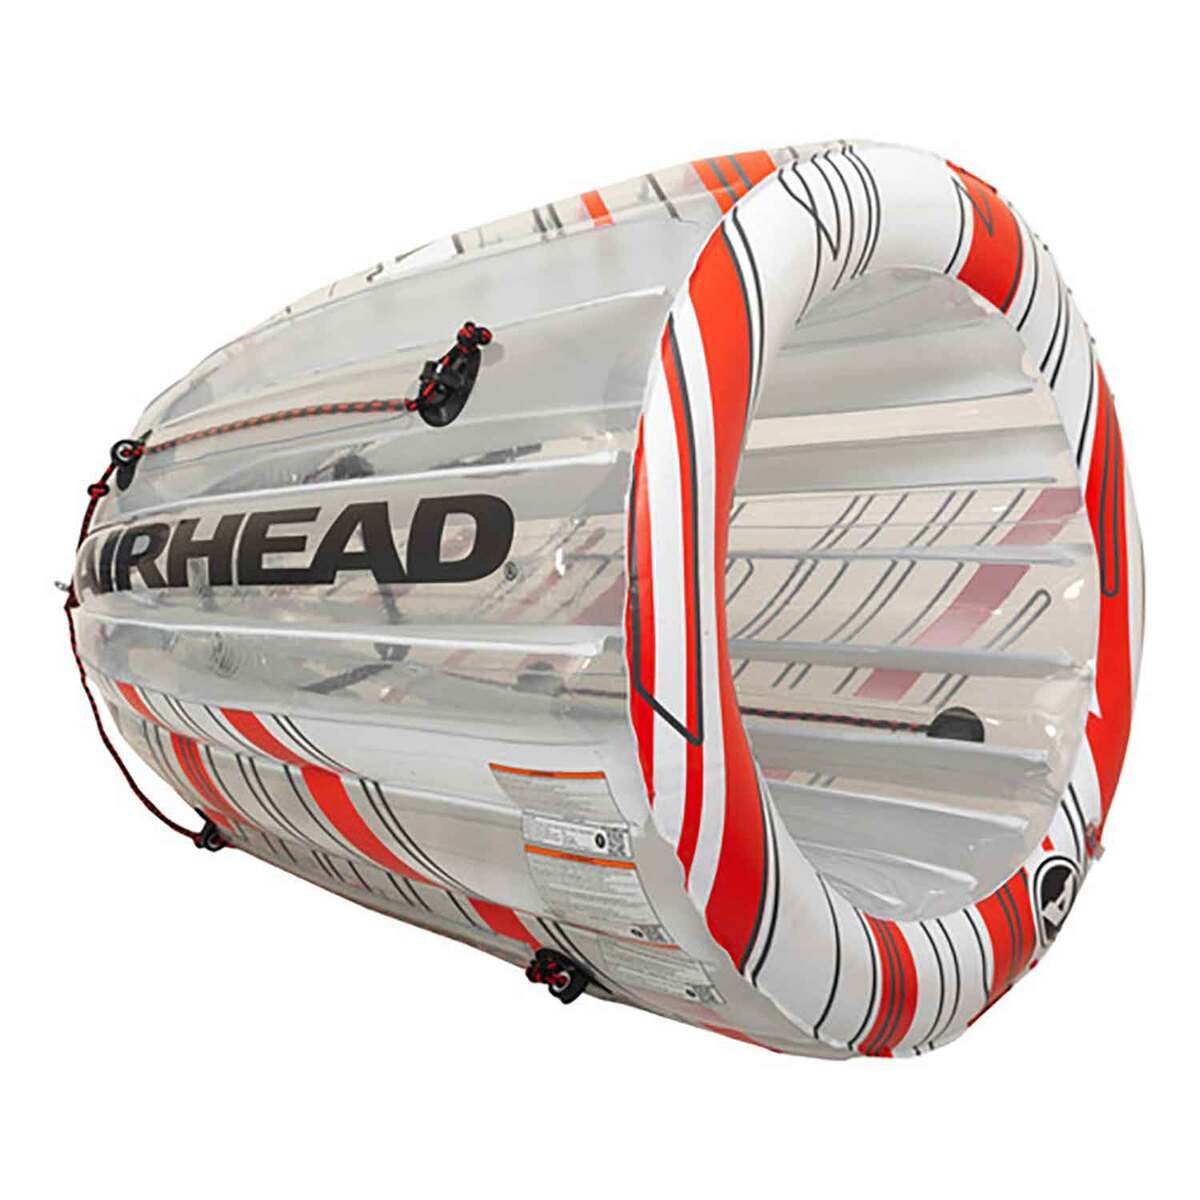 Airhead Gyro 1 Person Towable Tube Sportsman's Warehouse